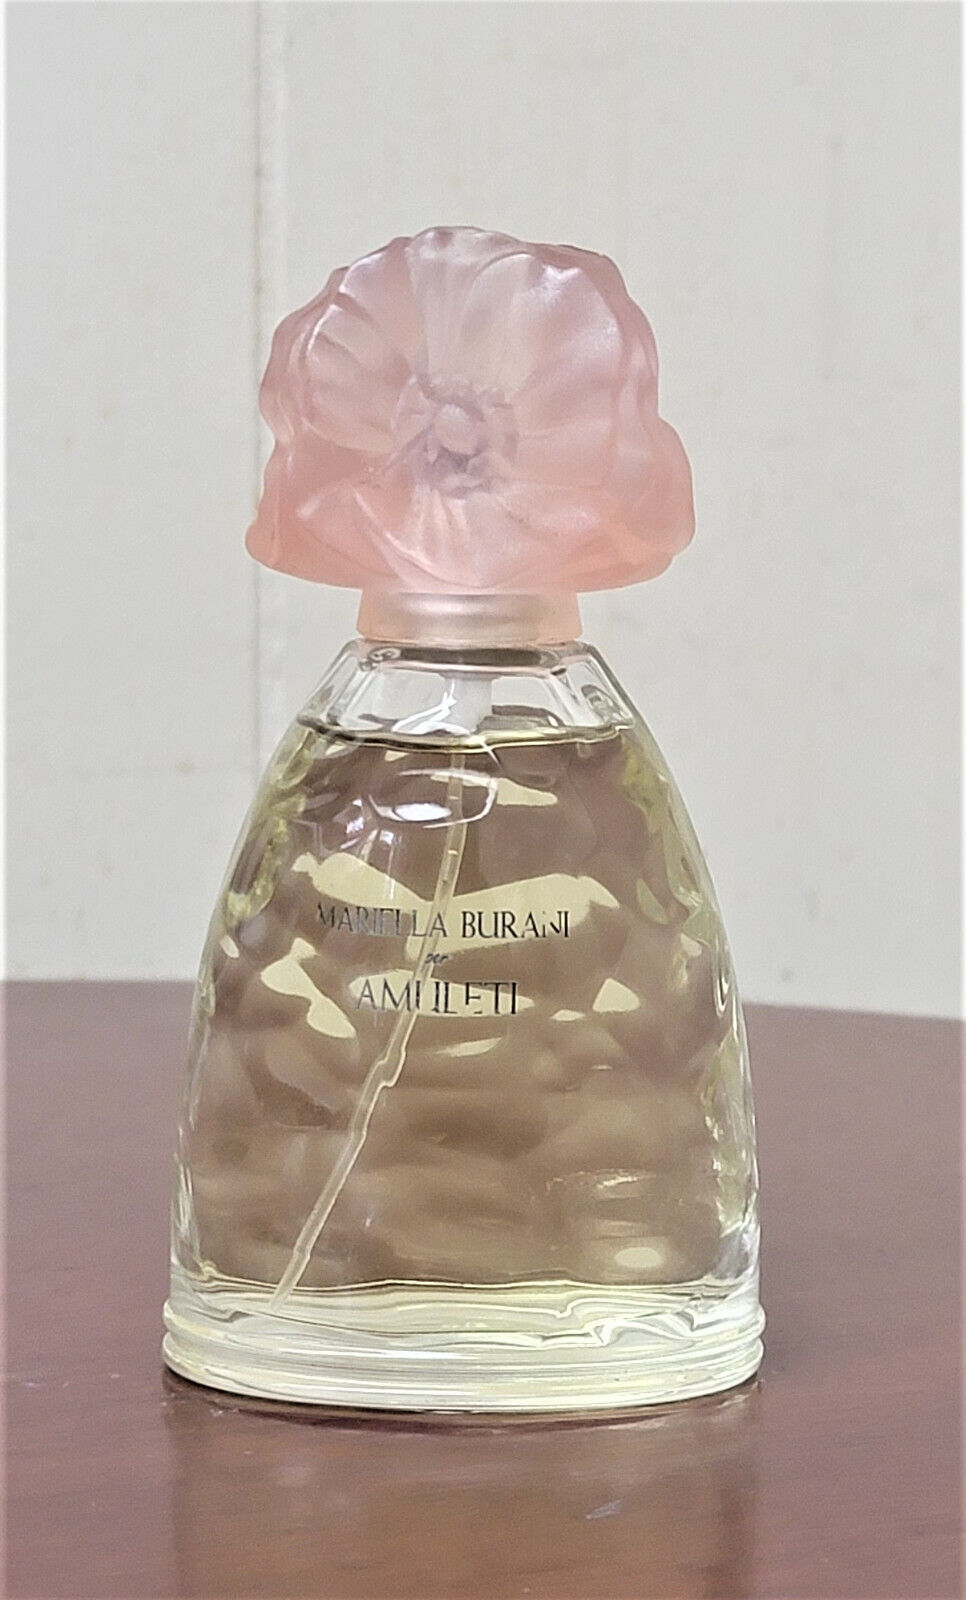 Amuleti by Mariella Burani 3.4oz / 100ml edt spy perfume for women femme vintage